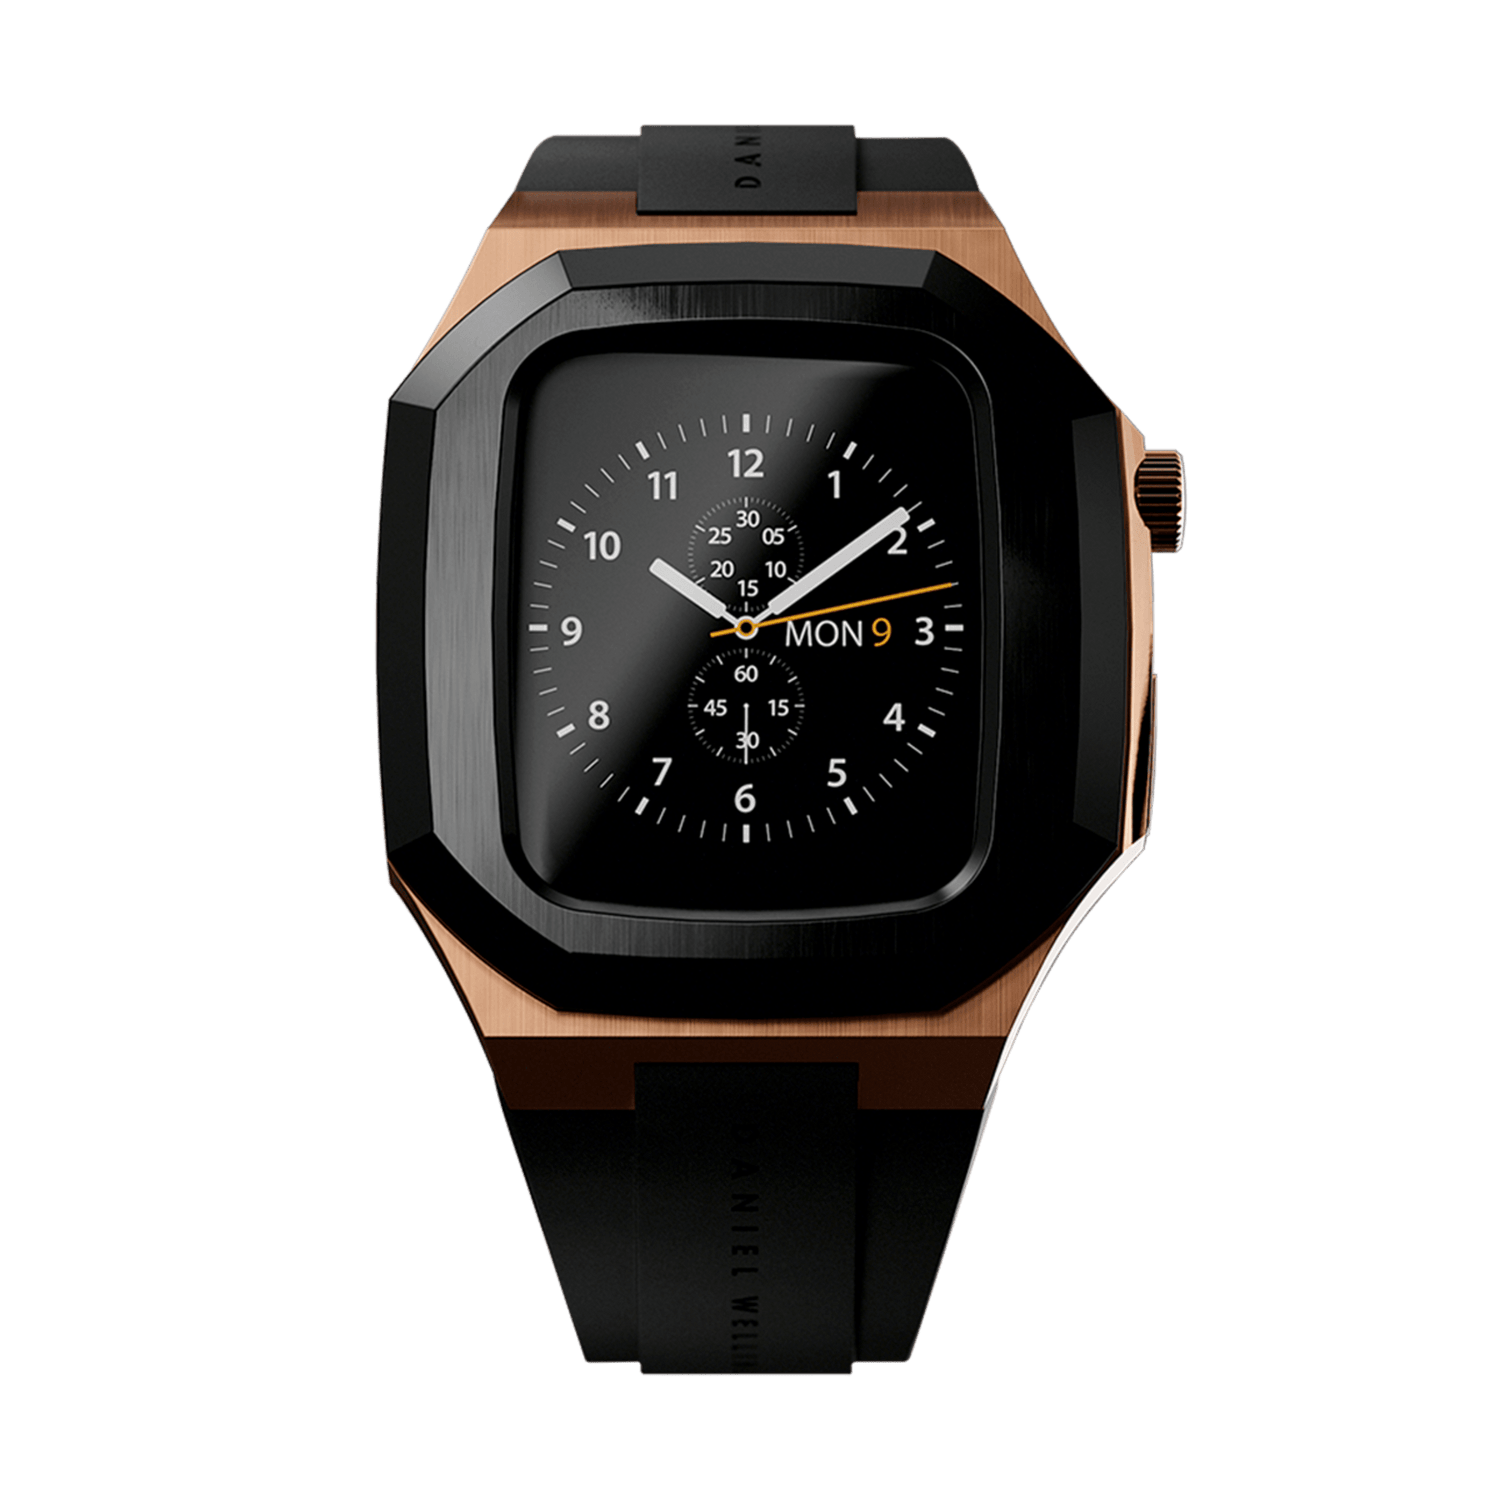 Smartwatch Case - Apple Watch Case Black - Size 40mm | DW